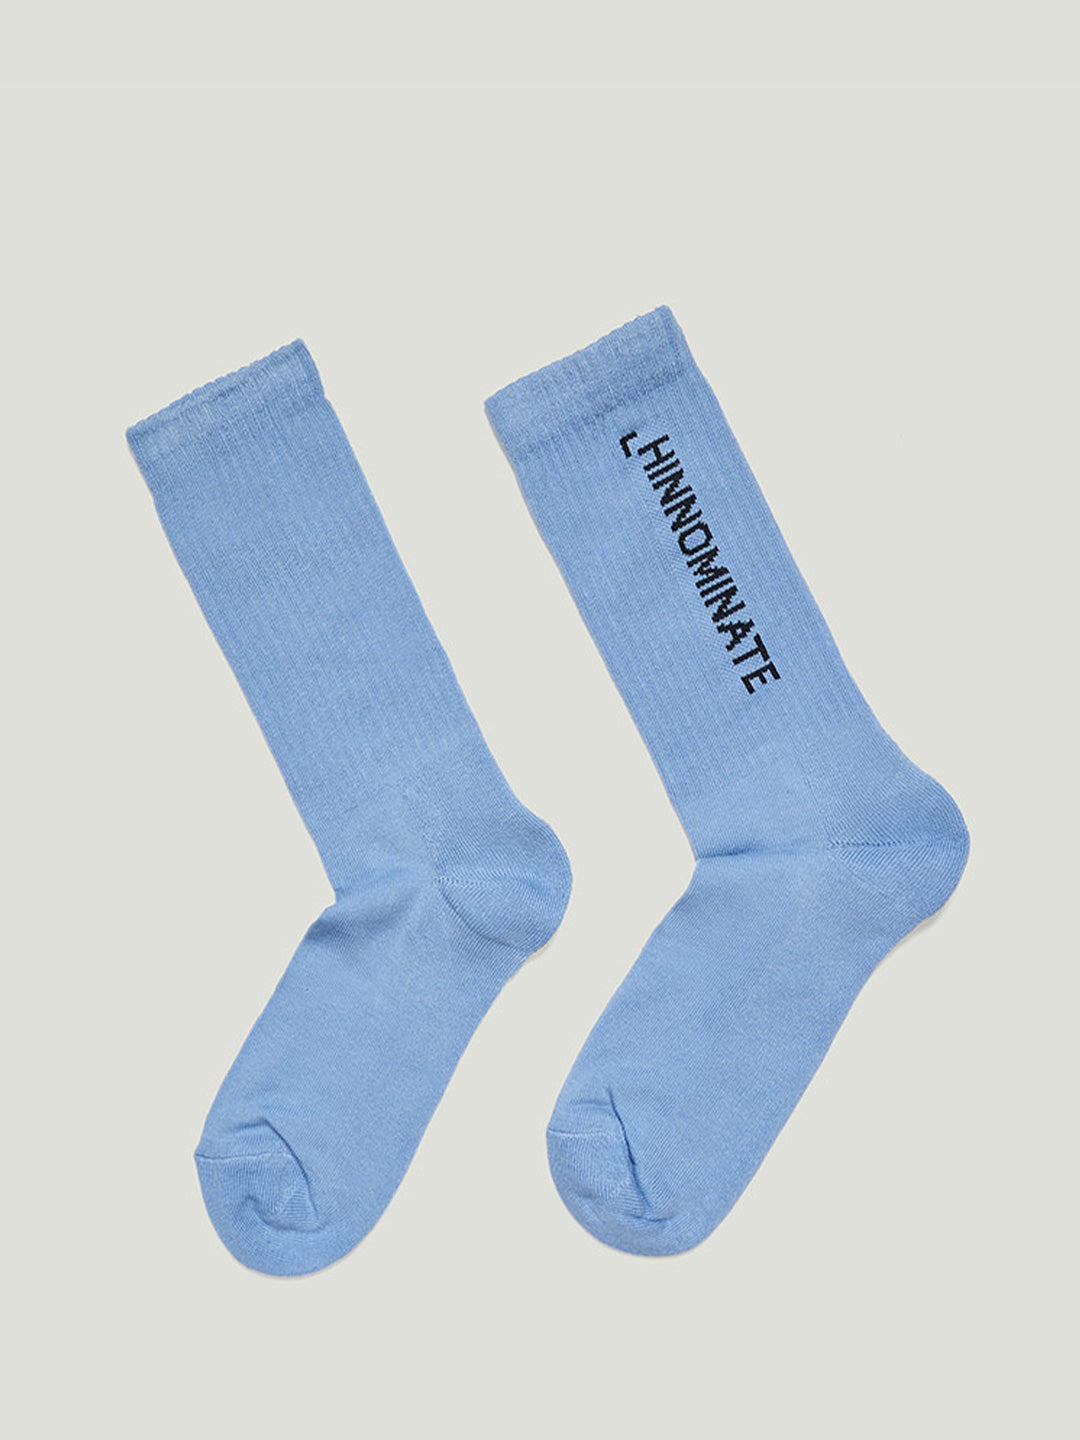 Hinnominate light blue socks with print